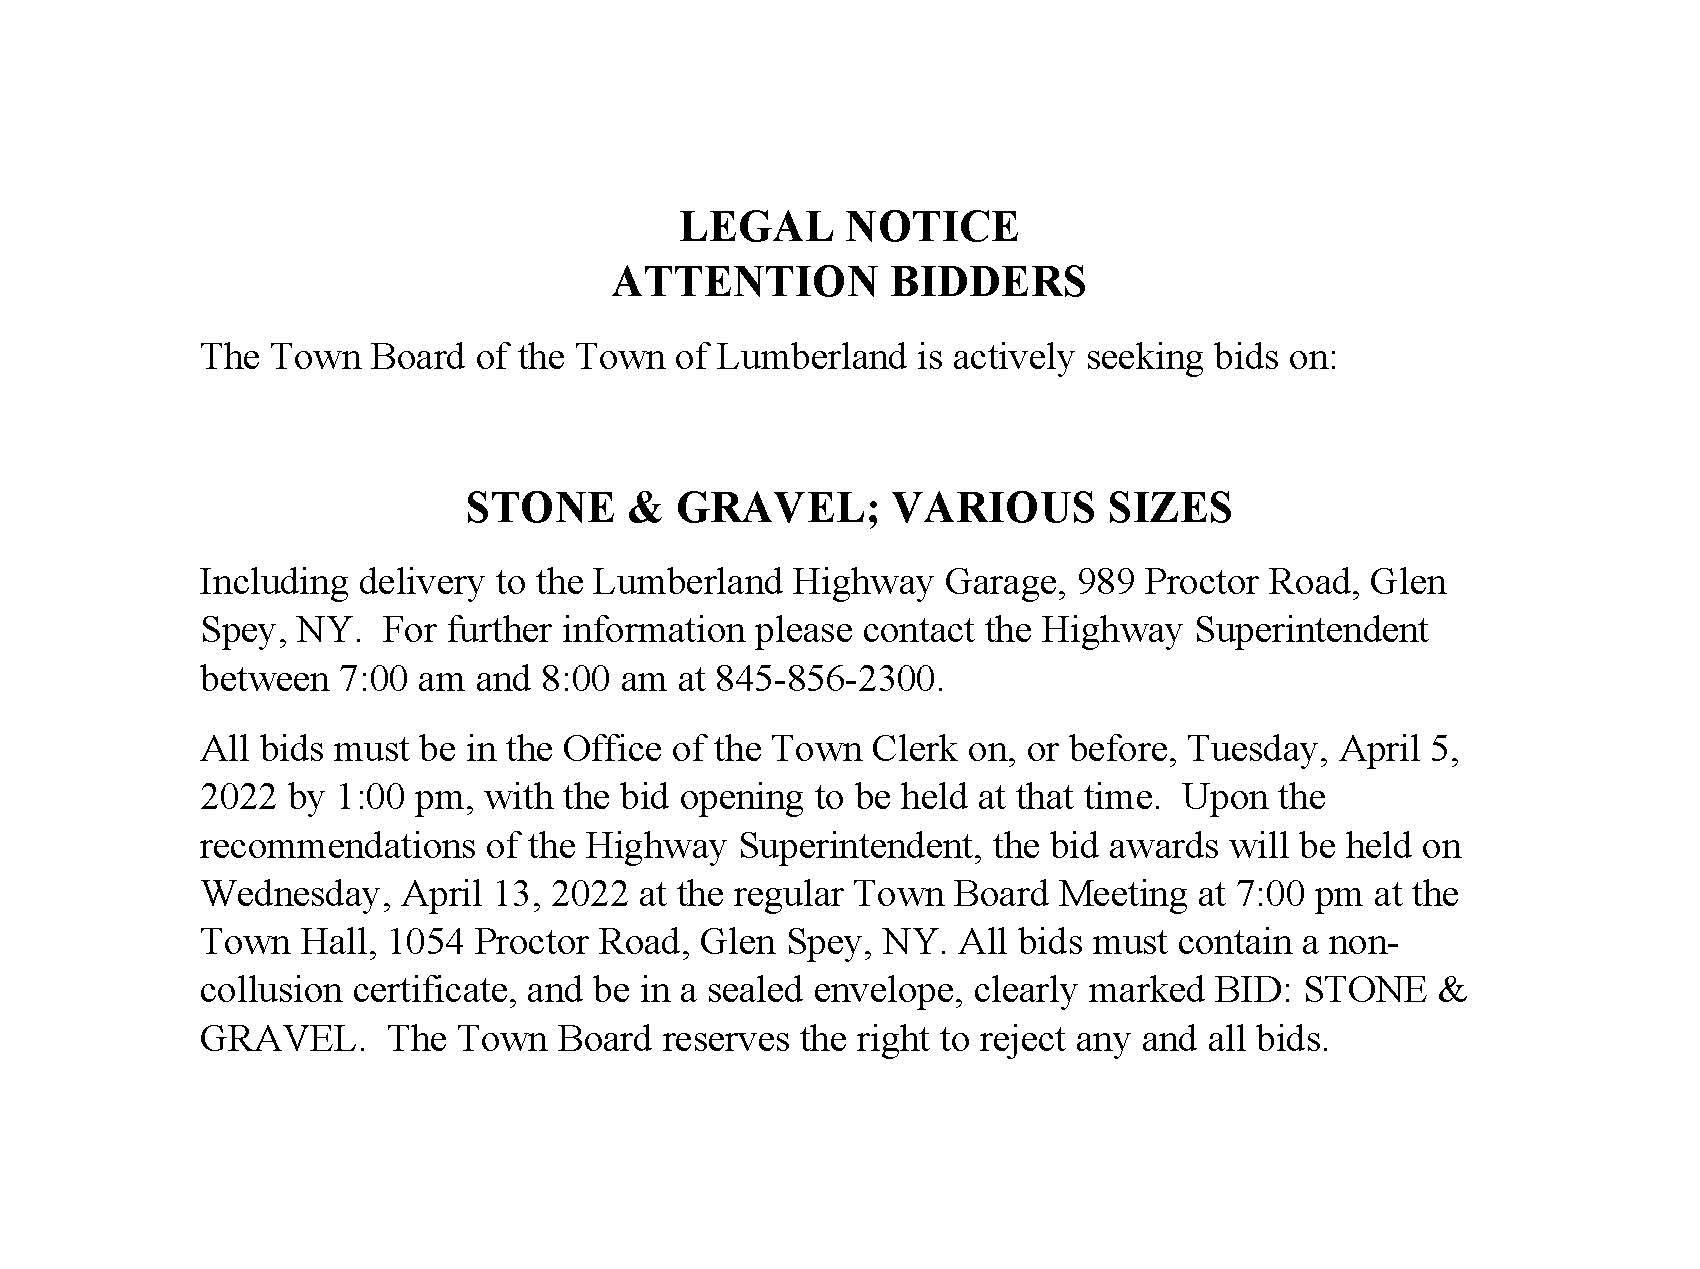 Legal Notice - Stone and Gravel Bid 2022 - Copy